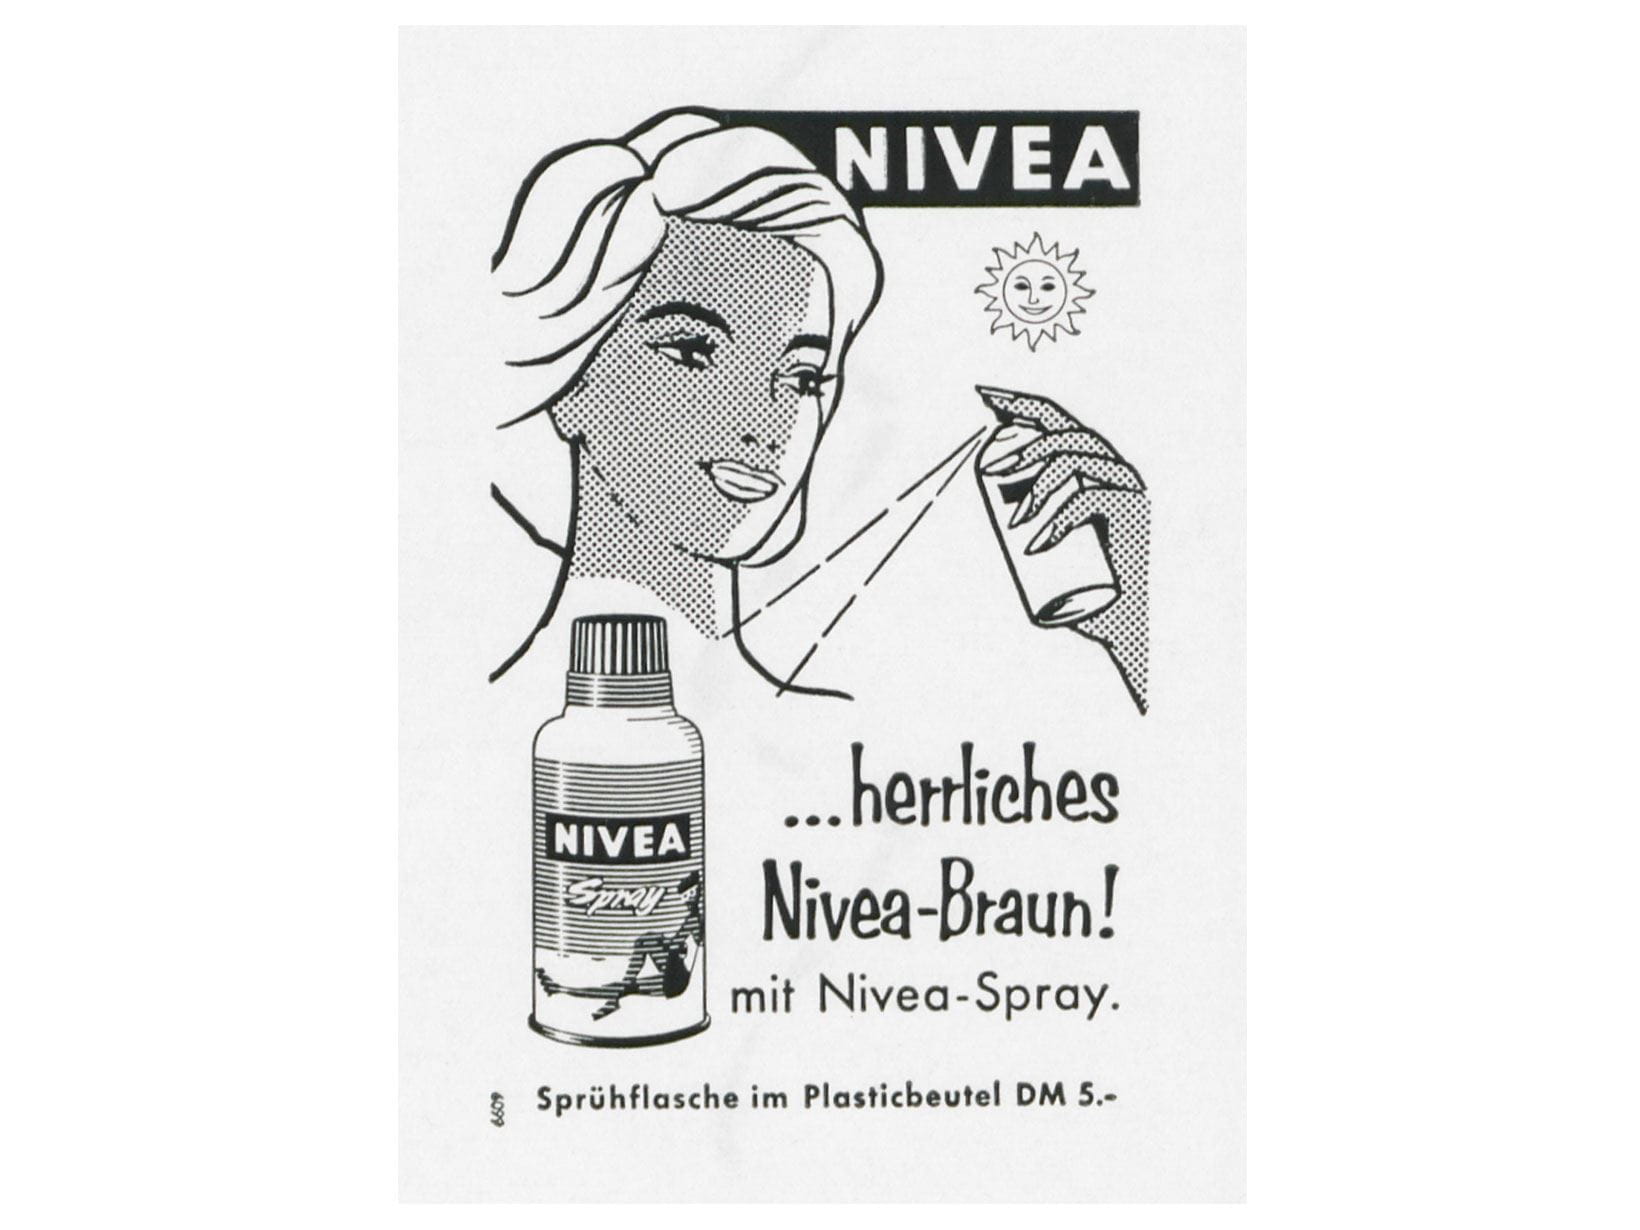 Anúncio NIVEA Spray 1959